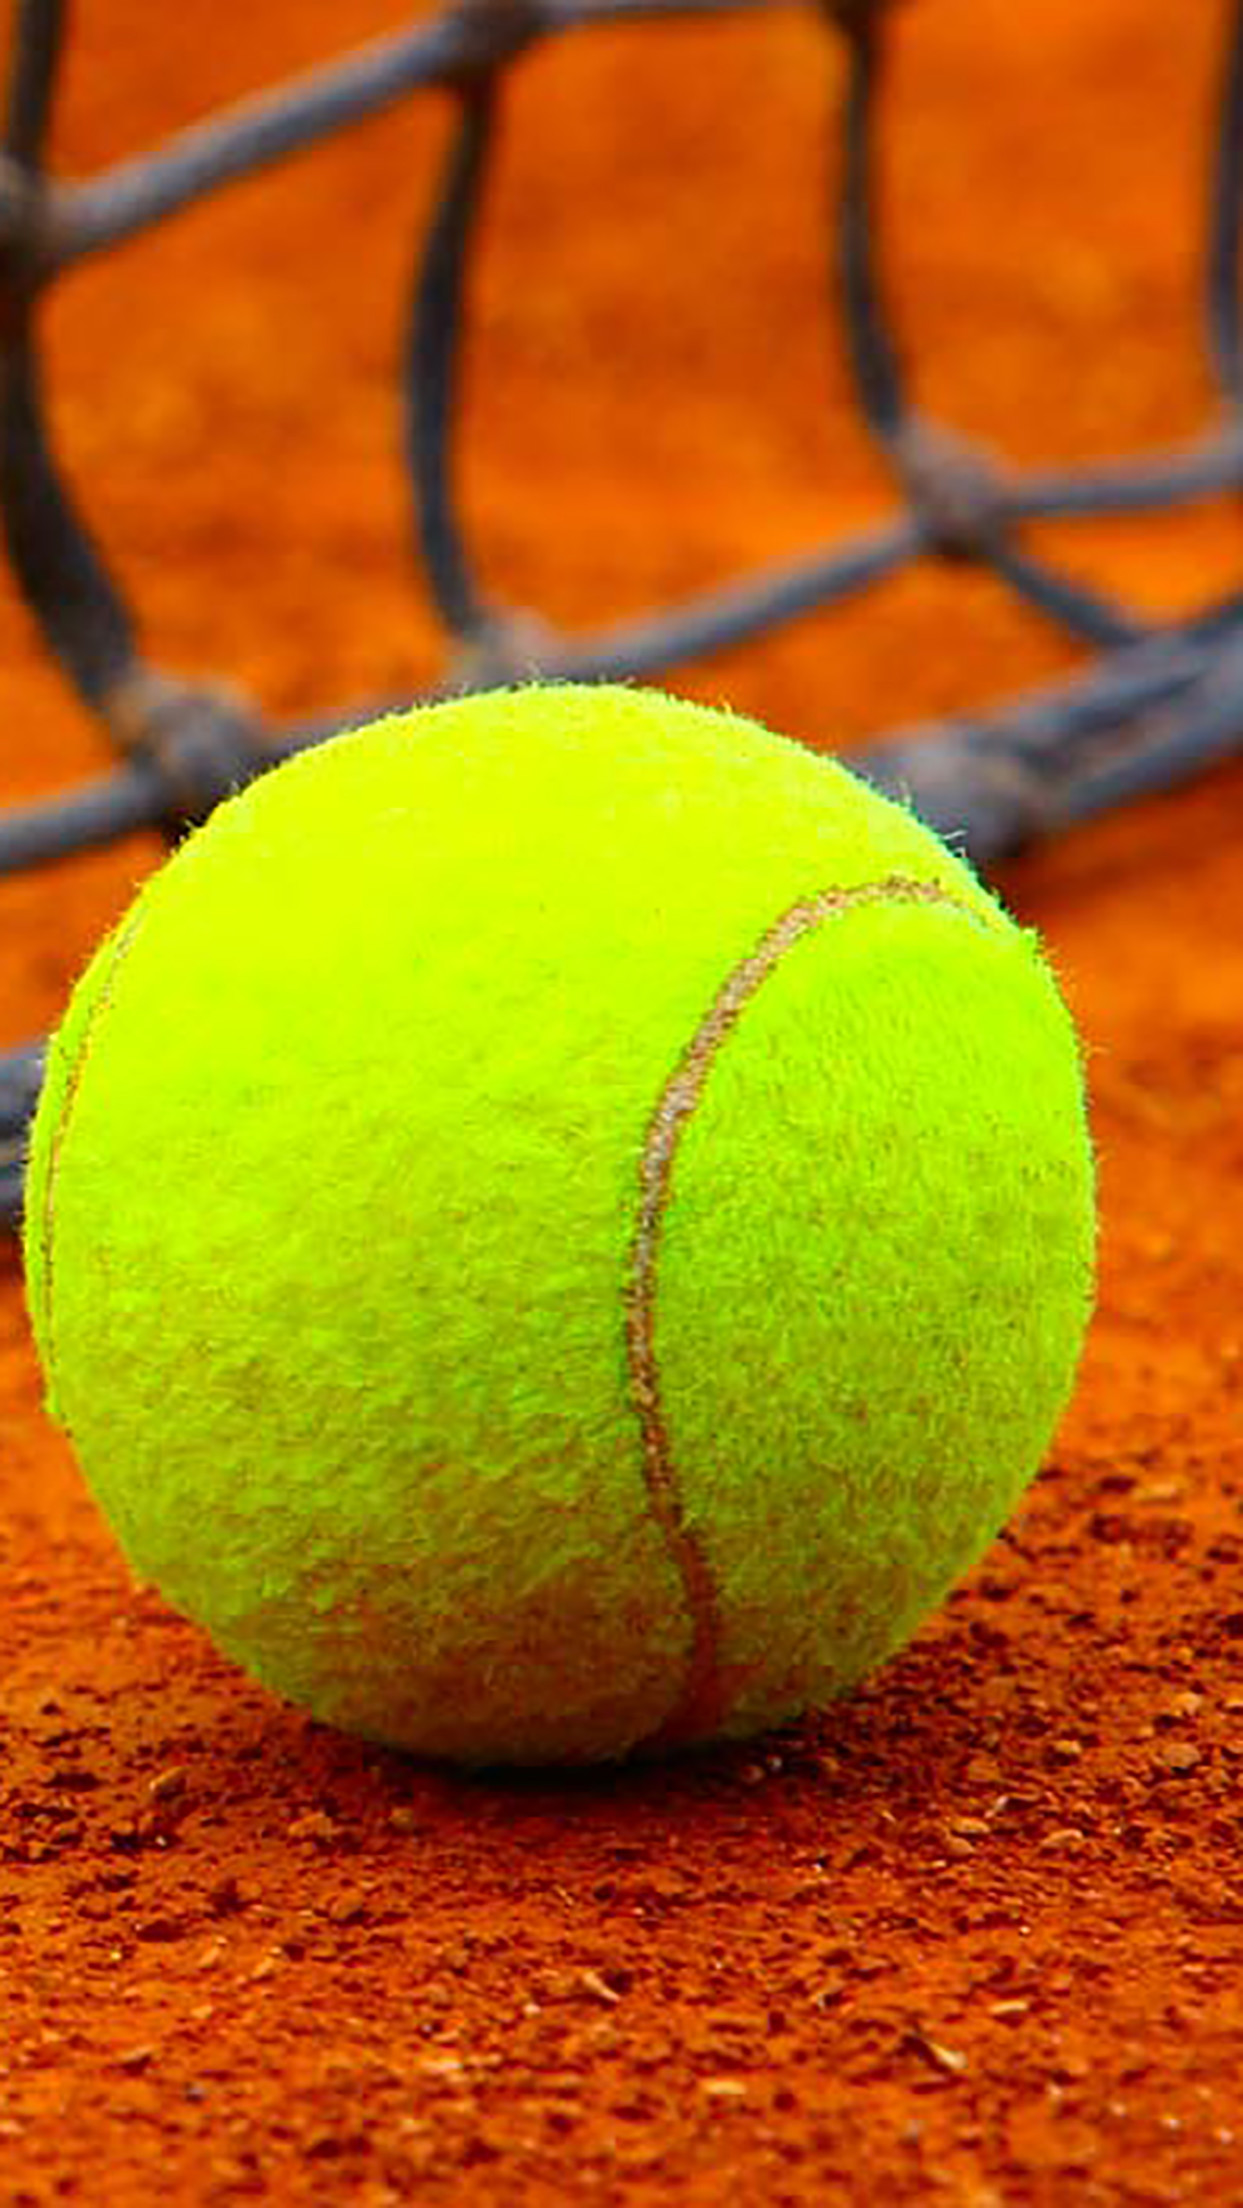 tennis ball wallpaper,tennis ball,tennis,ball,sports equipment,real tennis